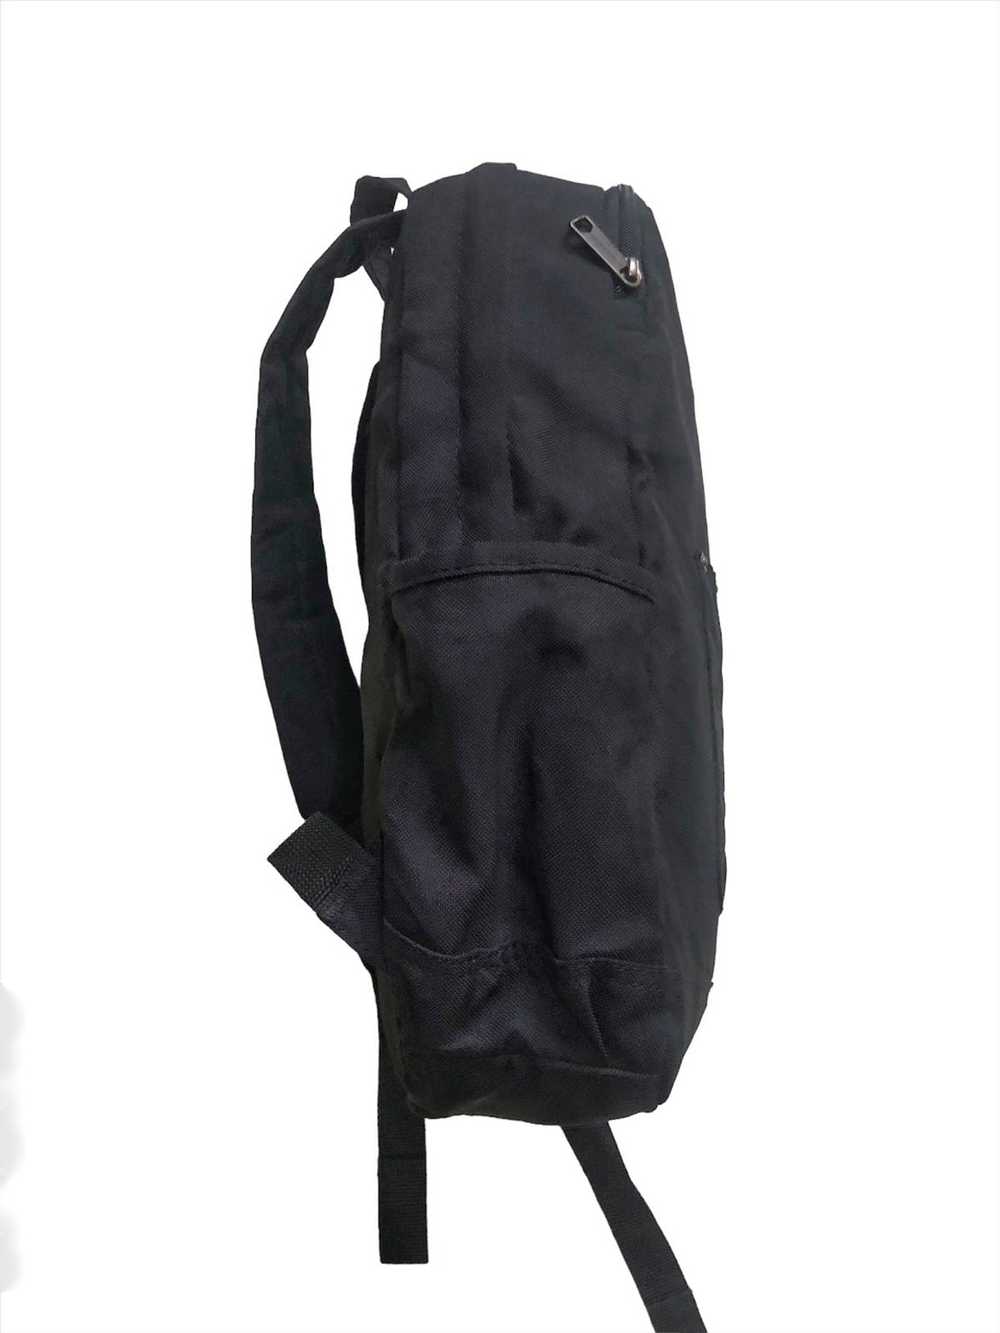 Carhartt × Carhartt Wip Carhart Wip Backpack - image 3